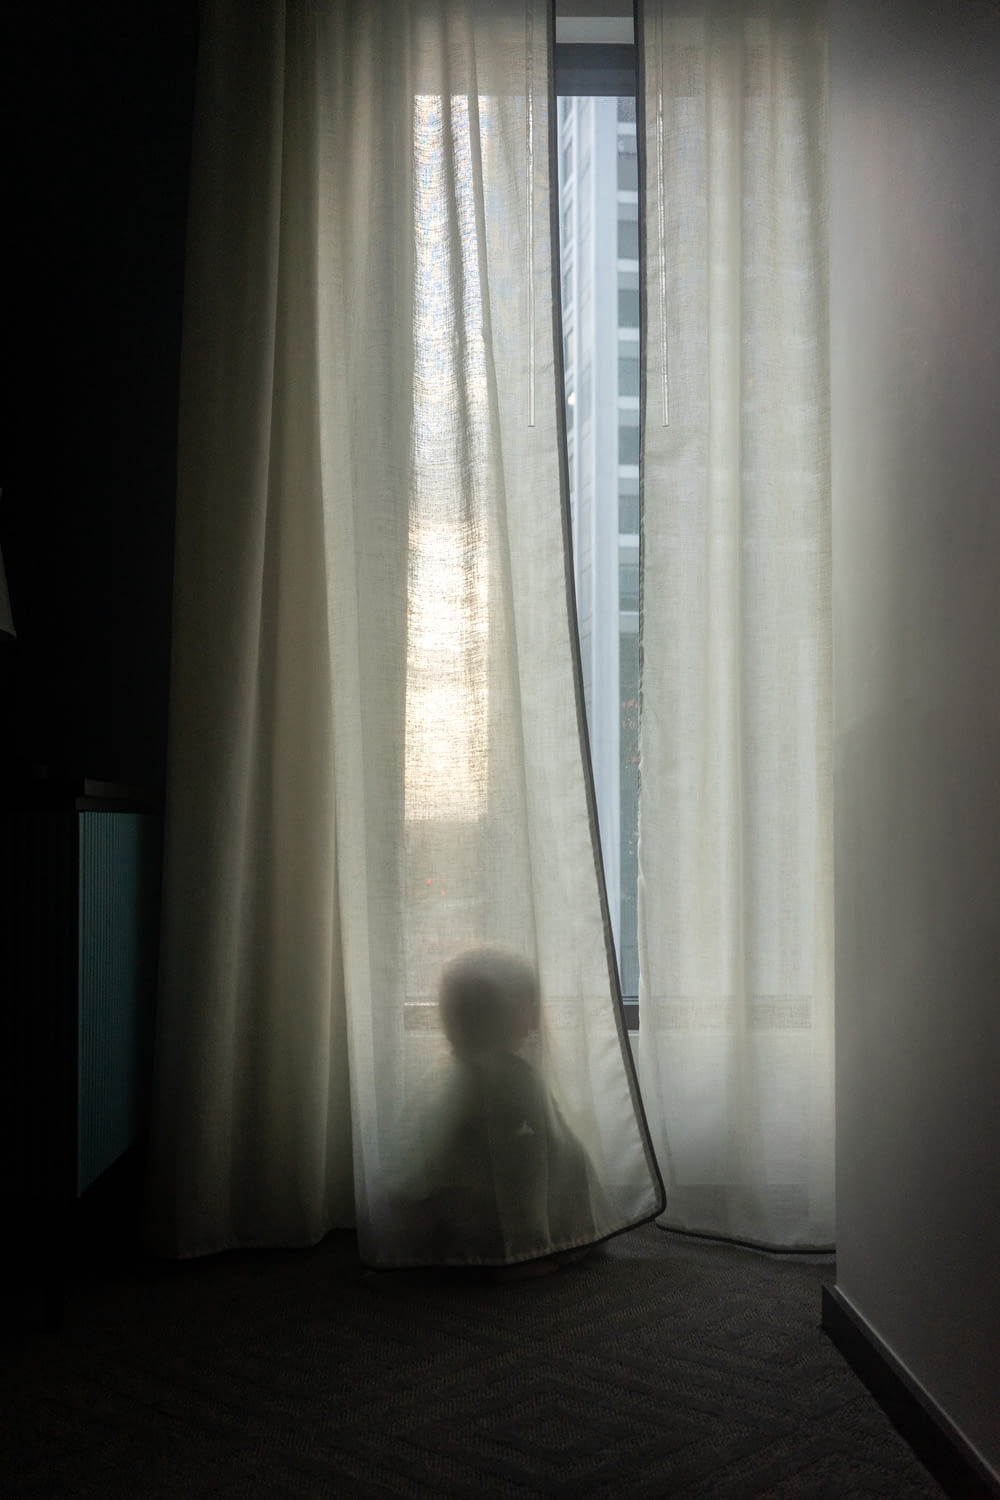 a teddy bear sitting in front of a window